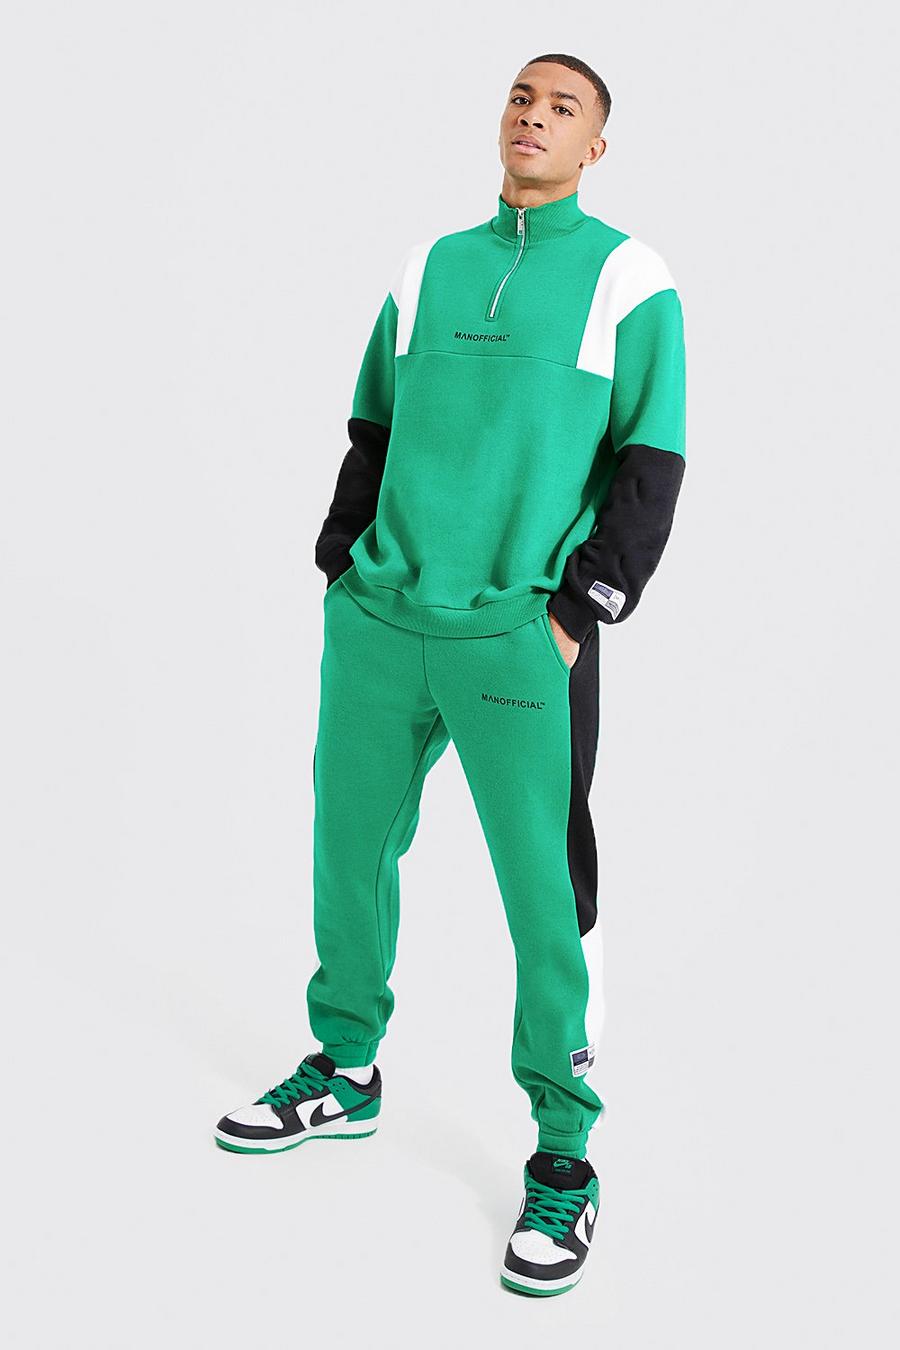 Lockerer Colorblock Trainingsanzug mit Reißverschluss, Green grün